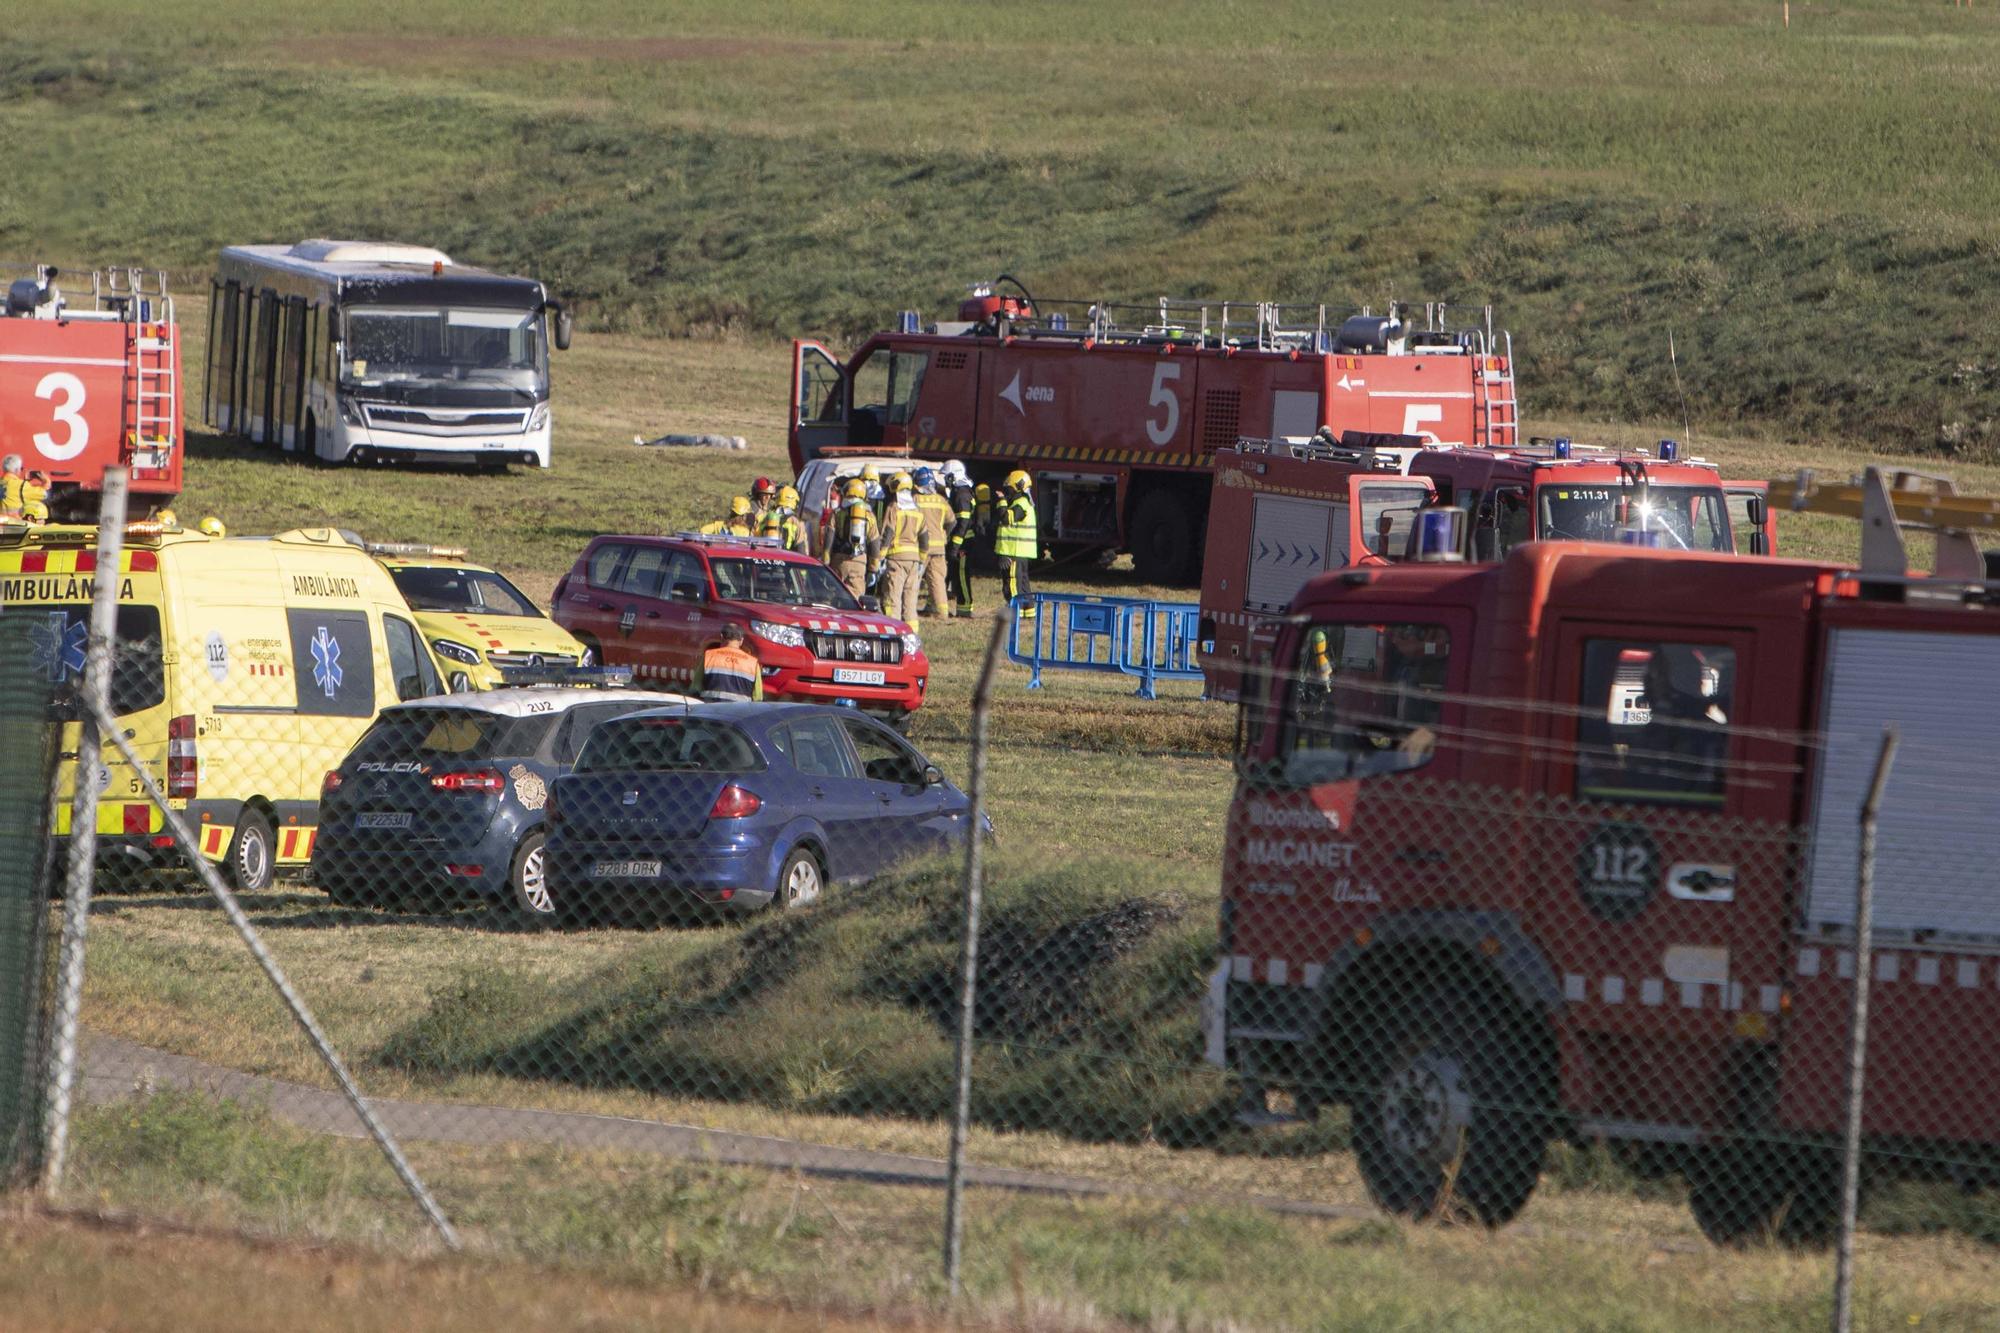 Simulacre d'accident aeri a l'aeroport de Girona